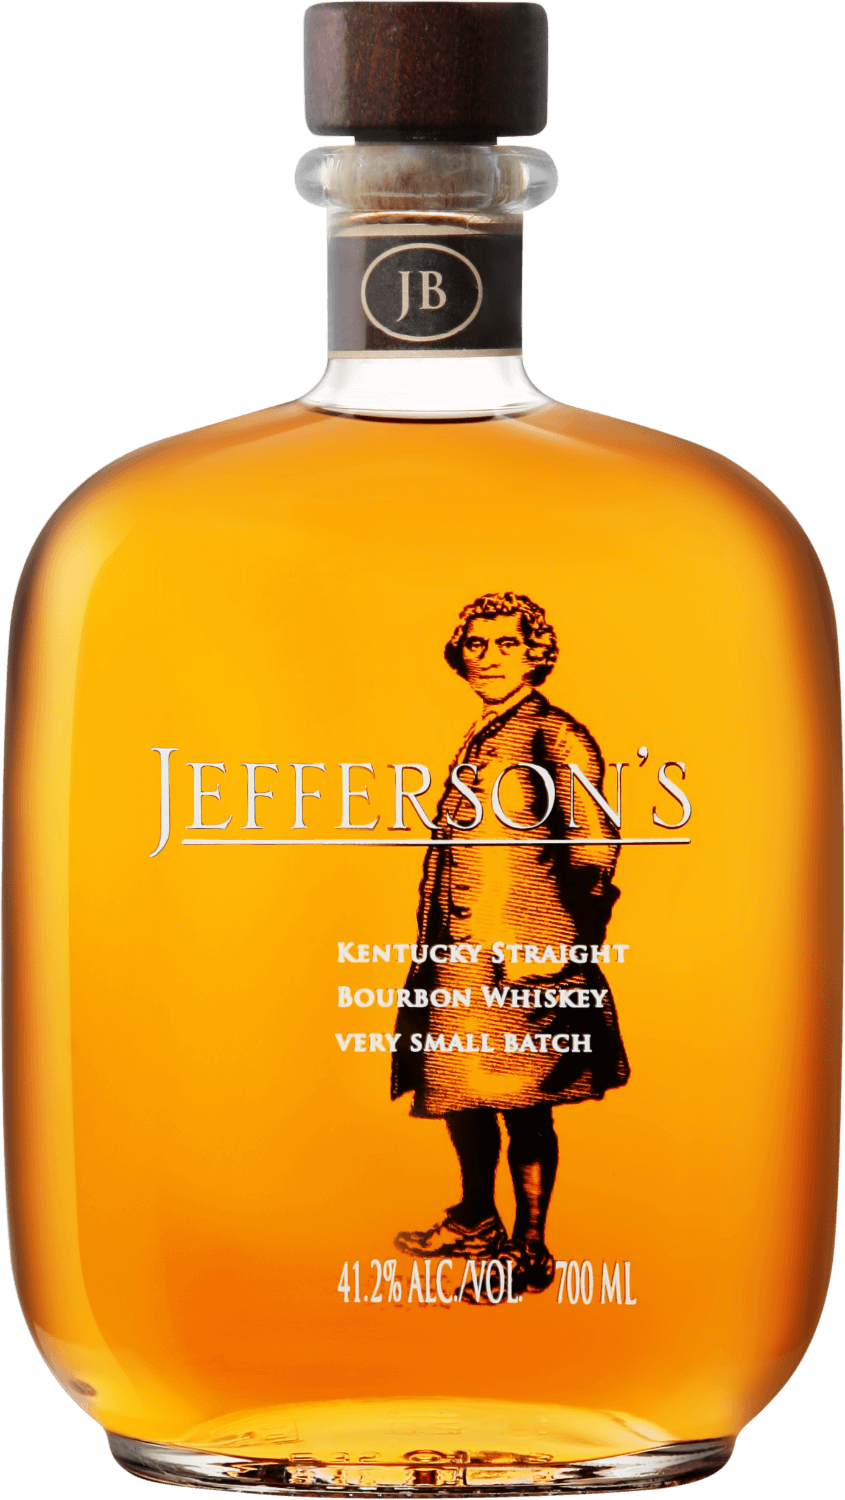 Jefferson’s Kentucky Straight Bourbon Whiskey jefferson’s kentucky straight bourbon whiskey